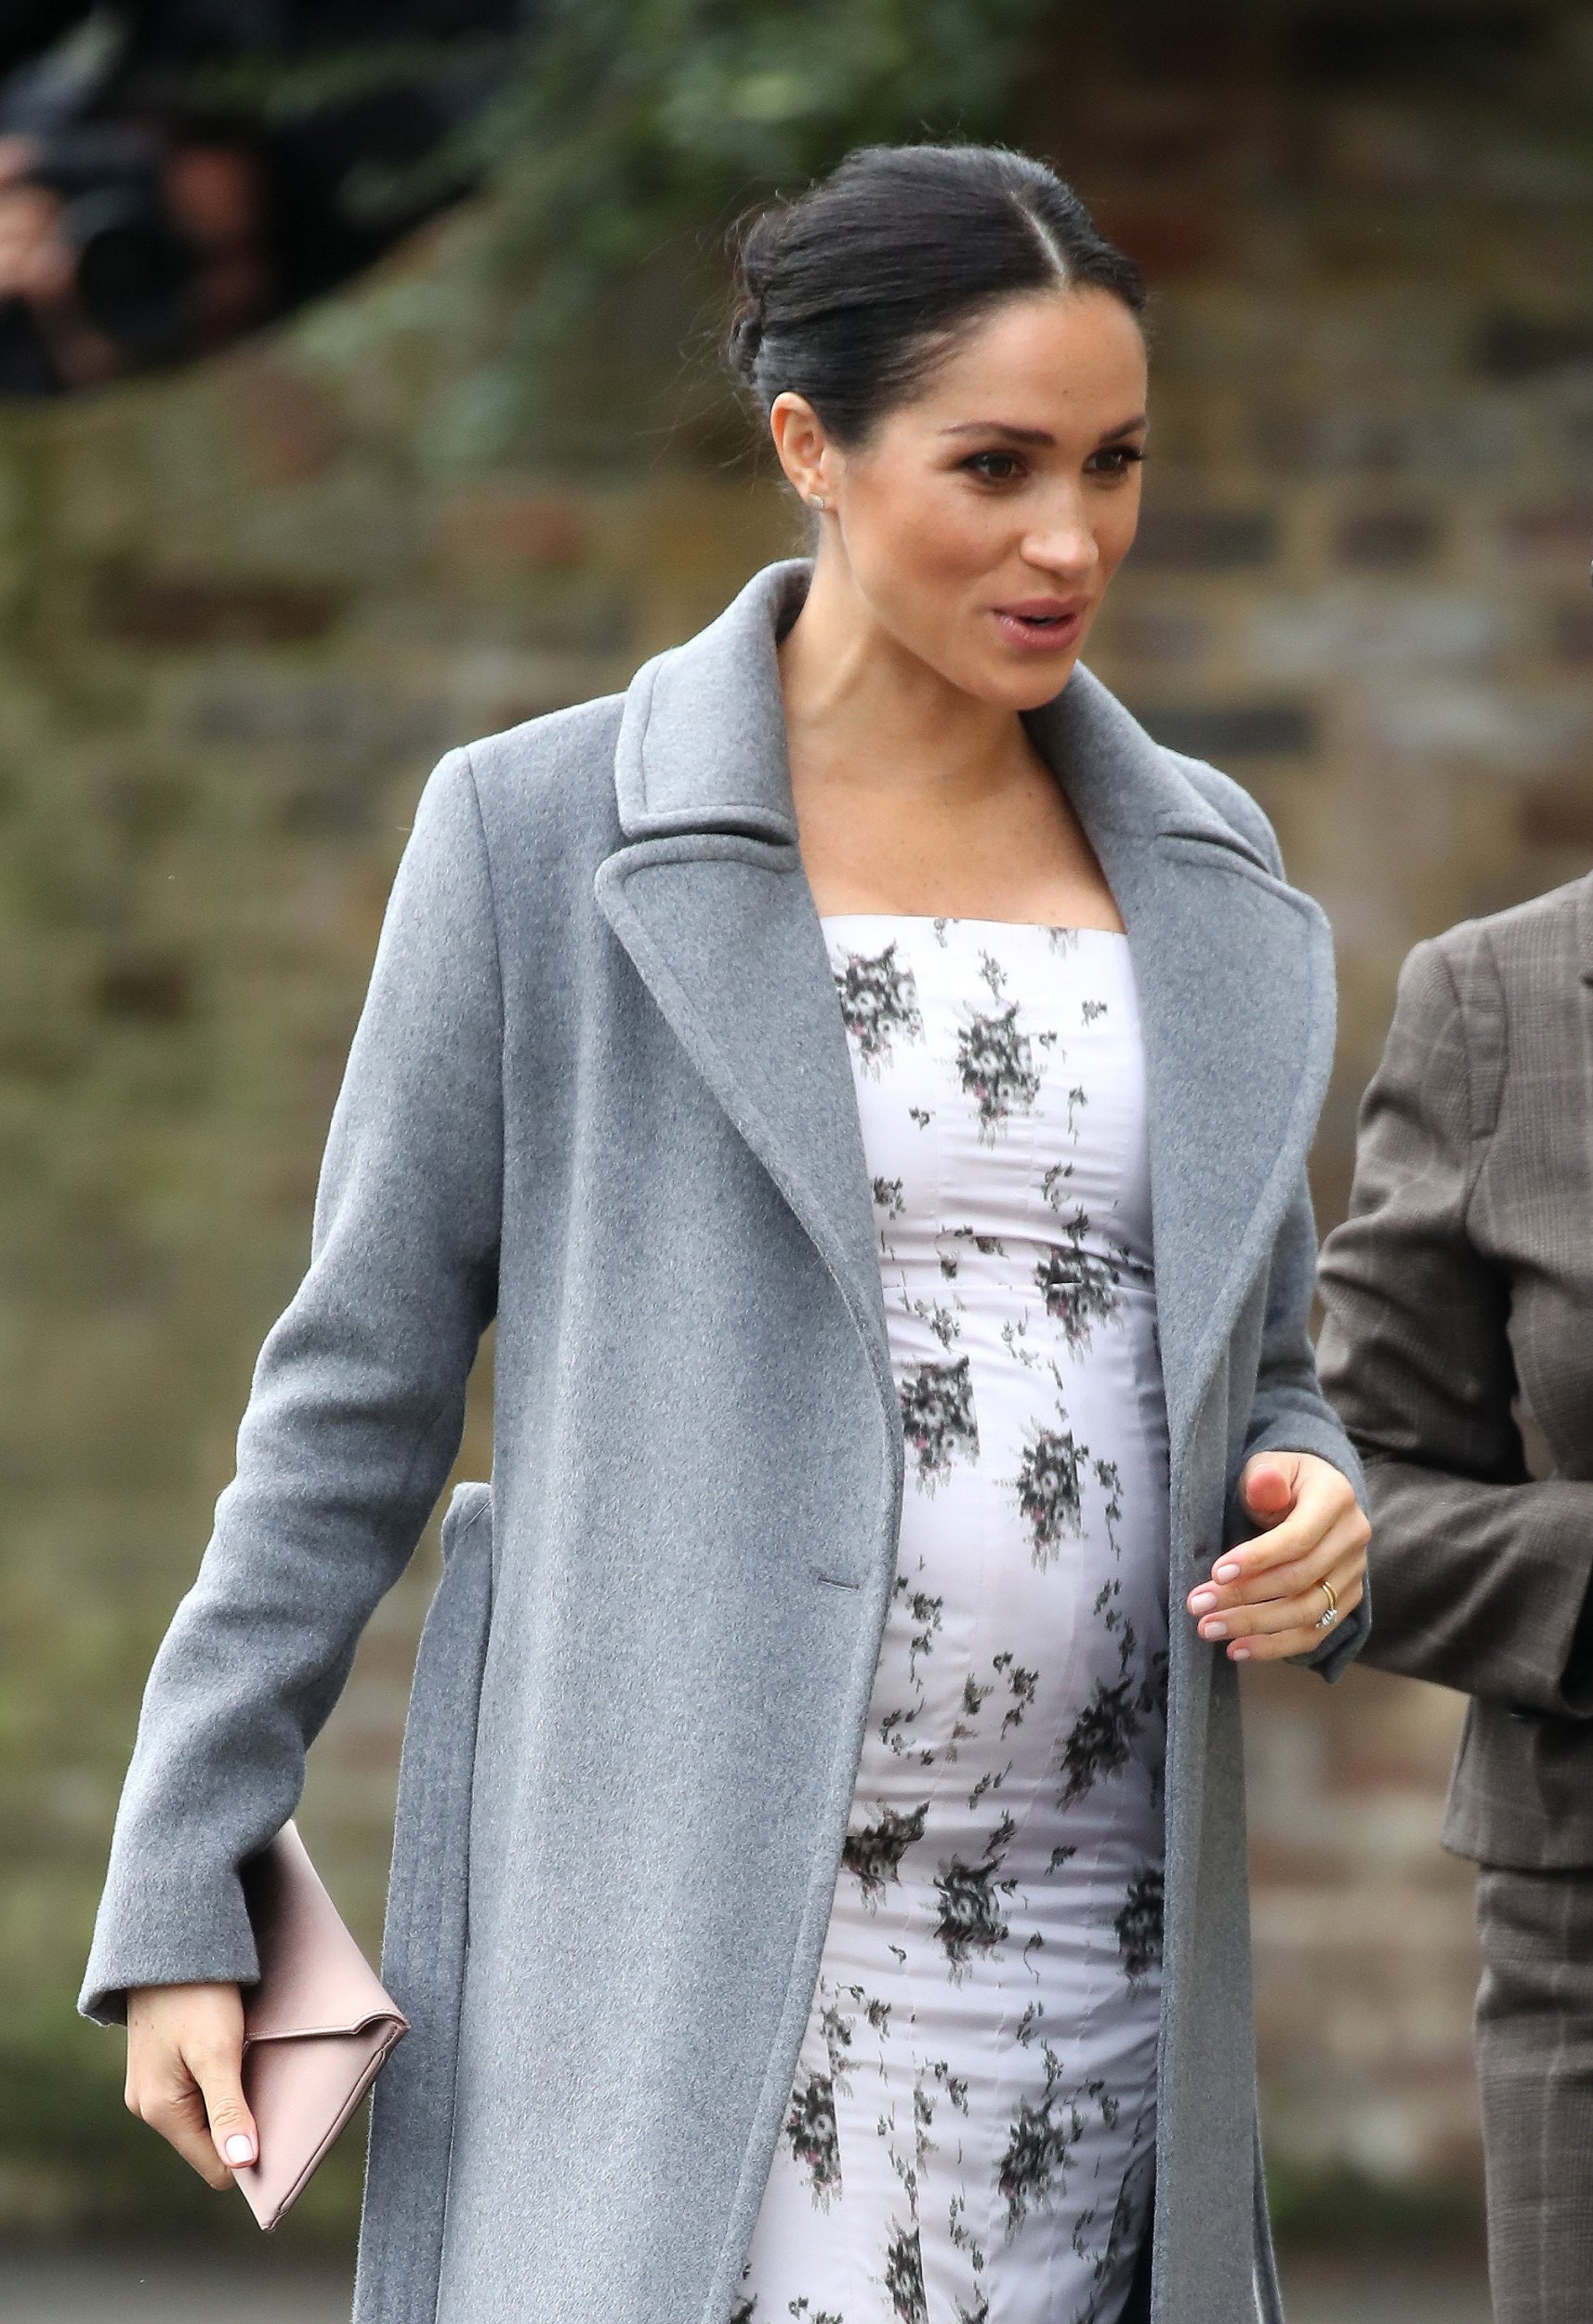 Meghan Markle Shows Off Baby Bump As She Visits Royal Variety Nursing Home